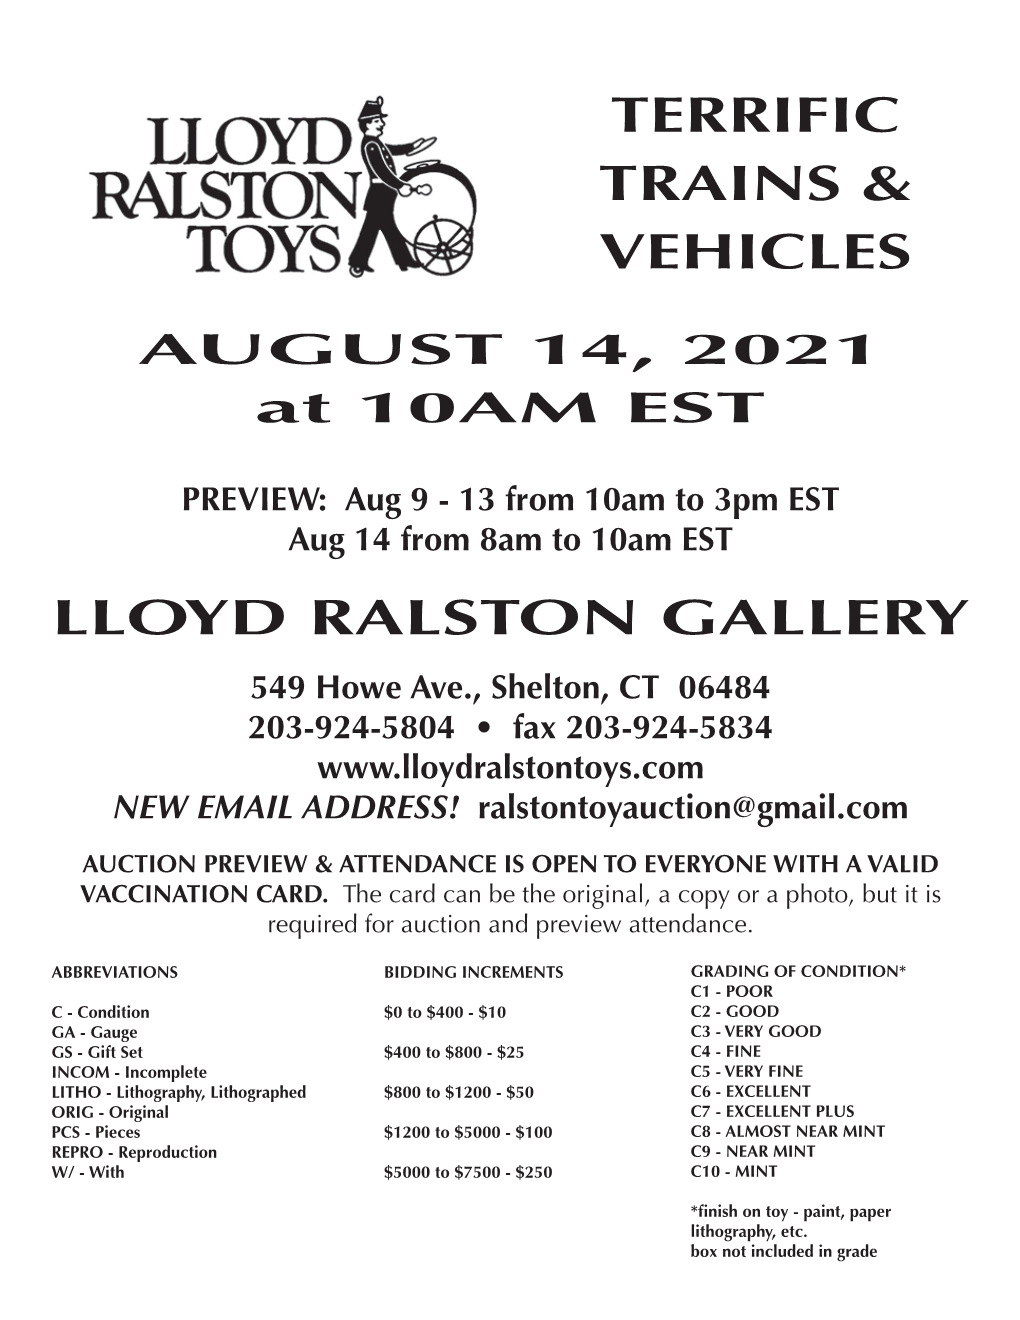 Terrific Trains & Vehicles Lloyd Ralston Gallery